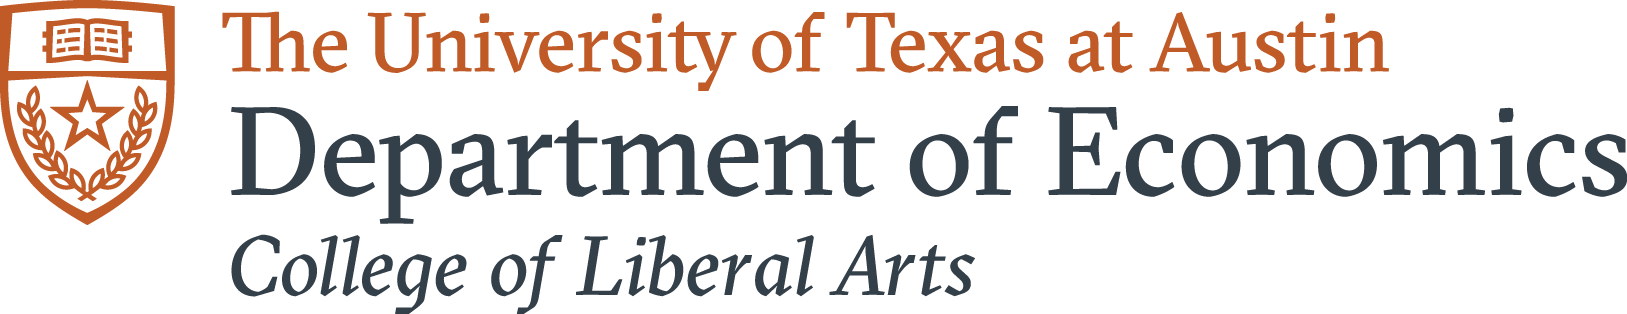 University of Texas at Austin Department of Economics logo